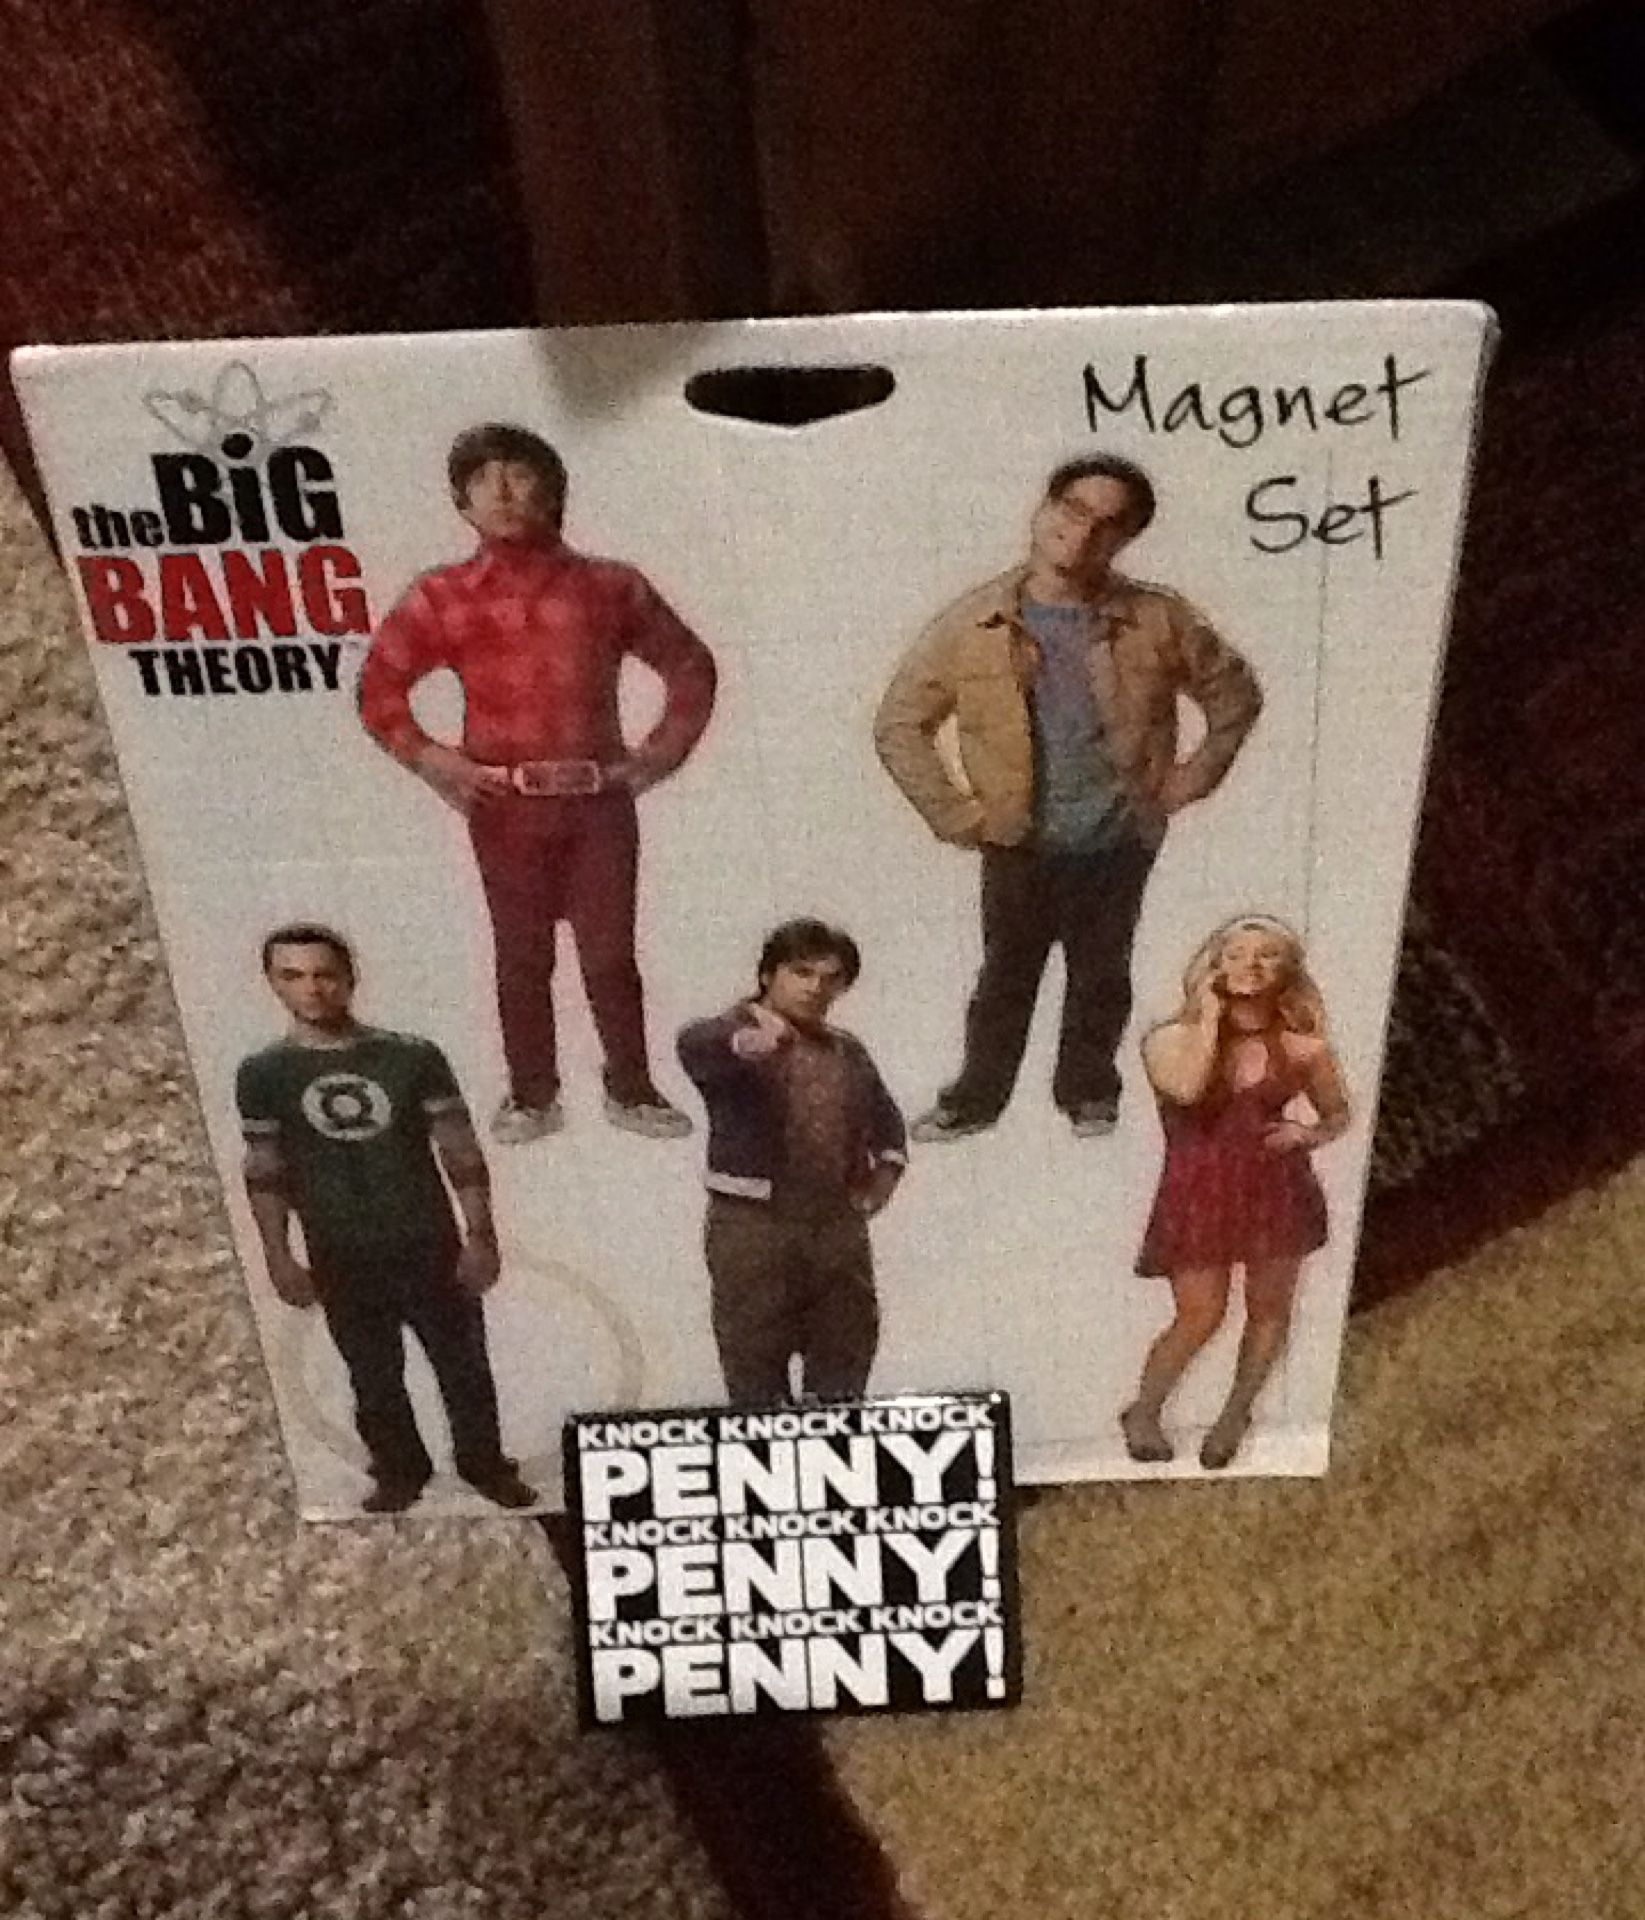 The Big Bang Theory -Magnet Set and the infamous "knock, knock, knock Penny-NIP